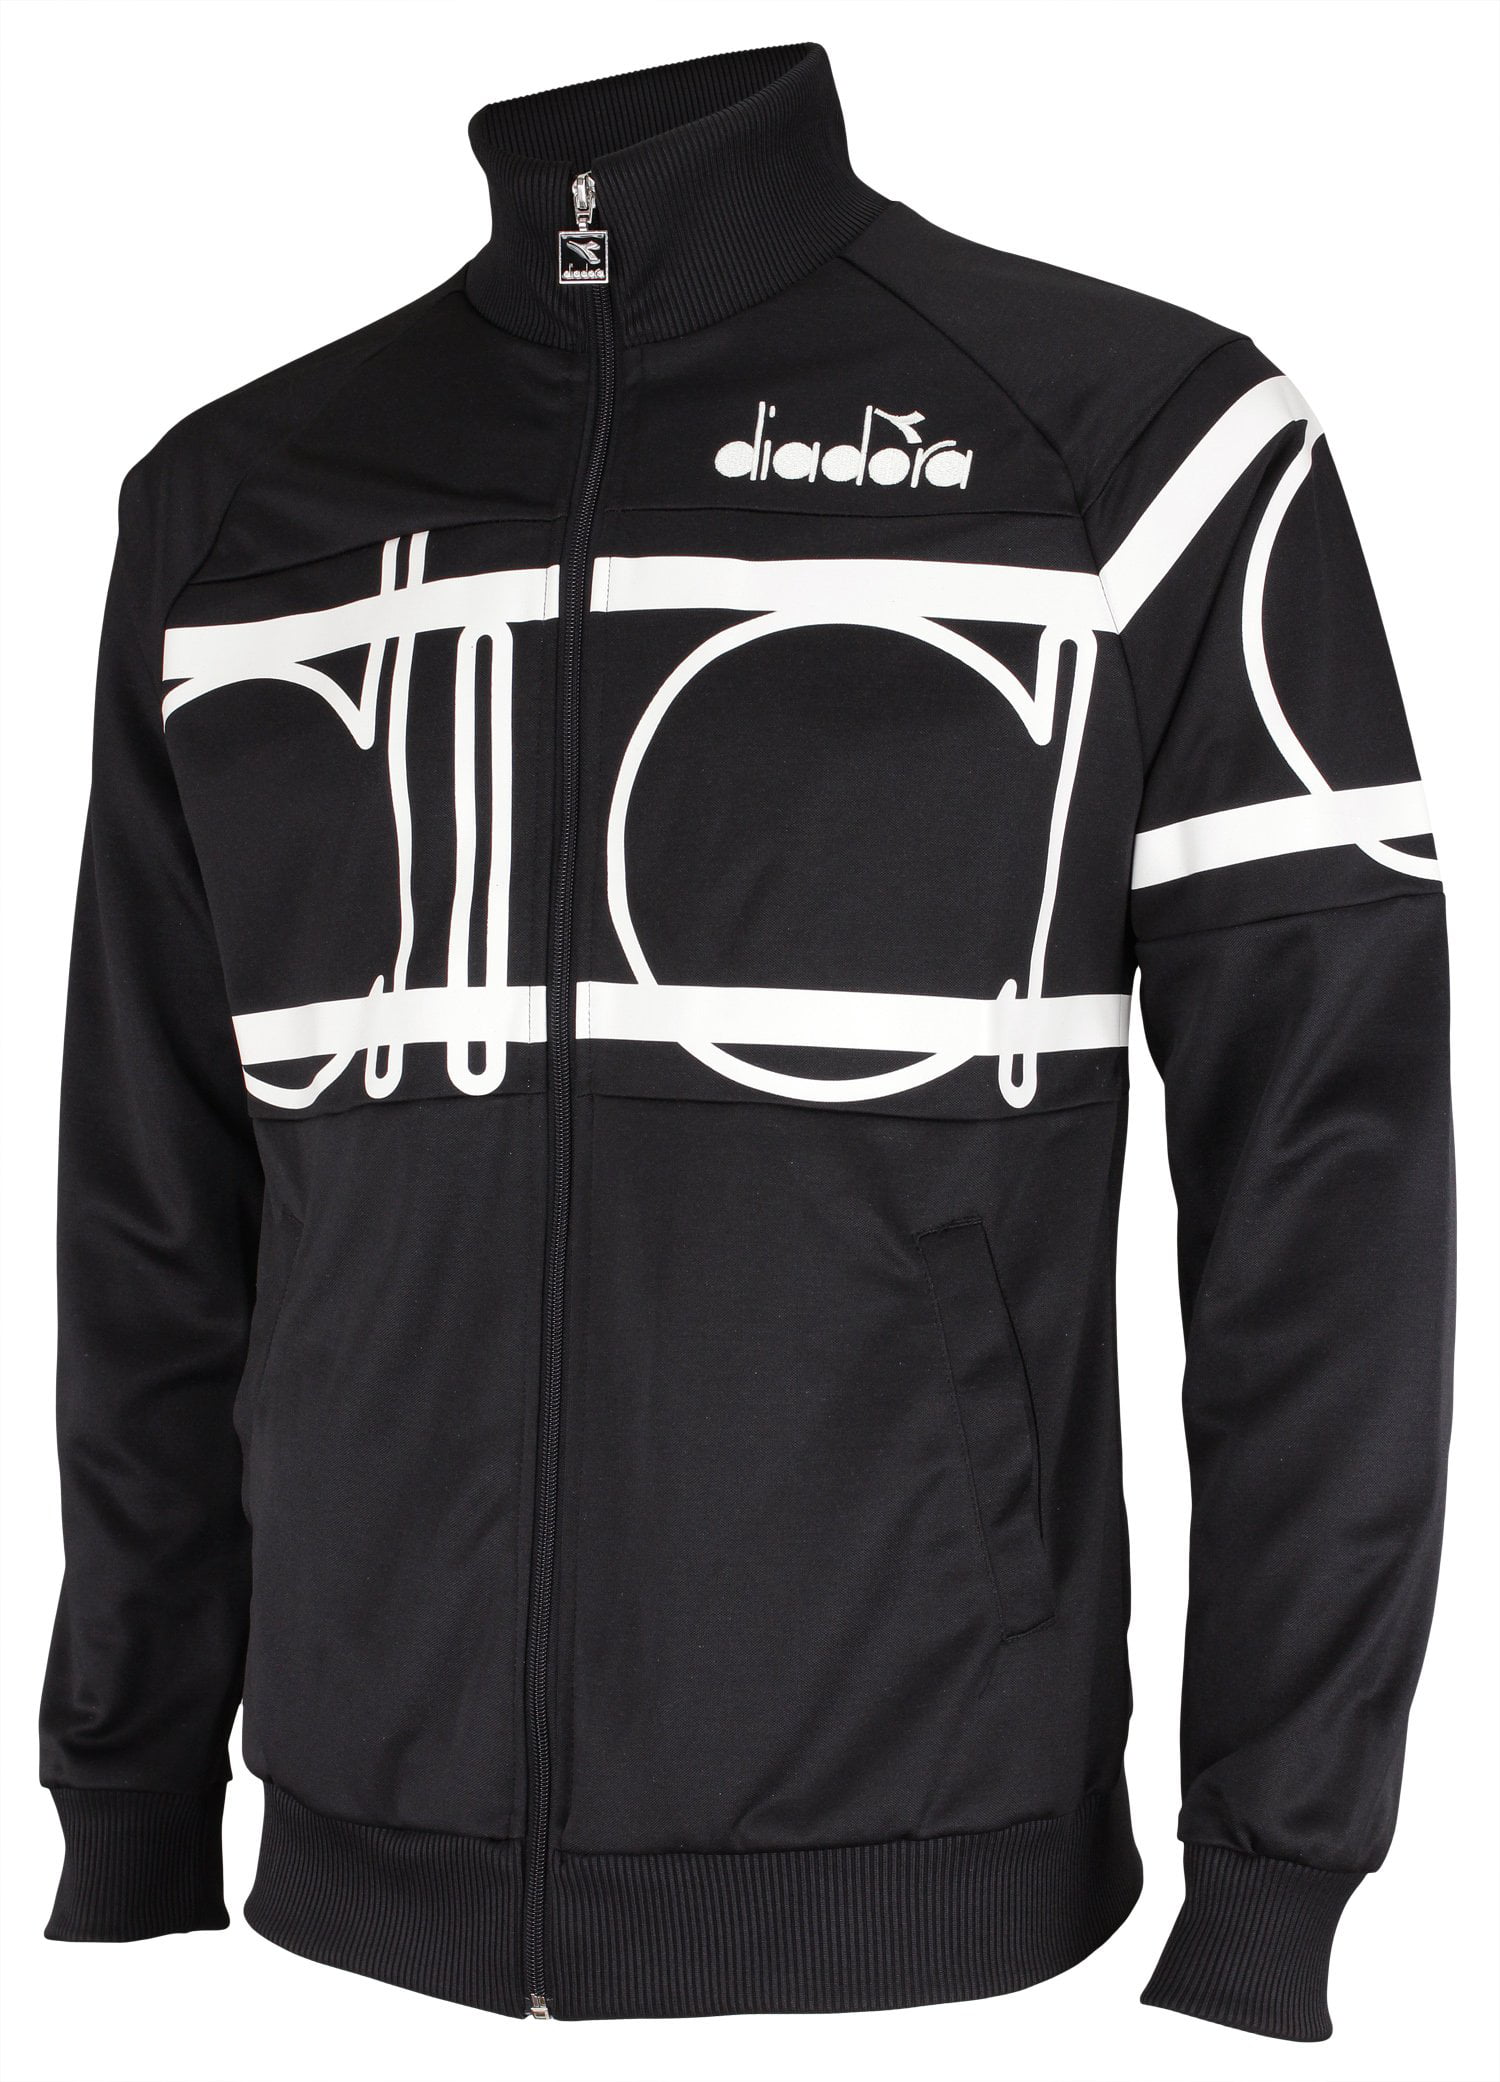 Diadora Jacket Jacket 80S for Man 